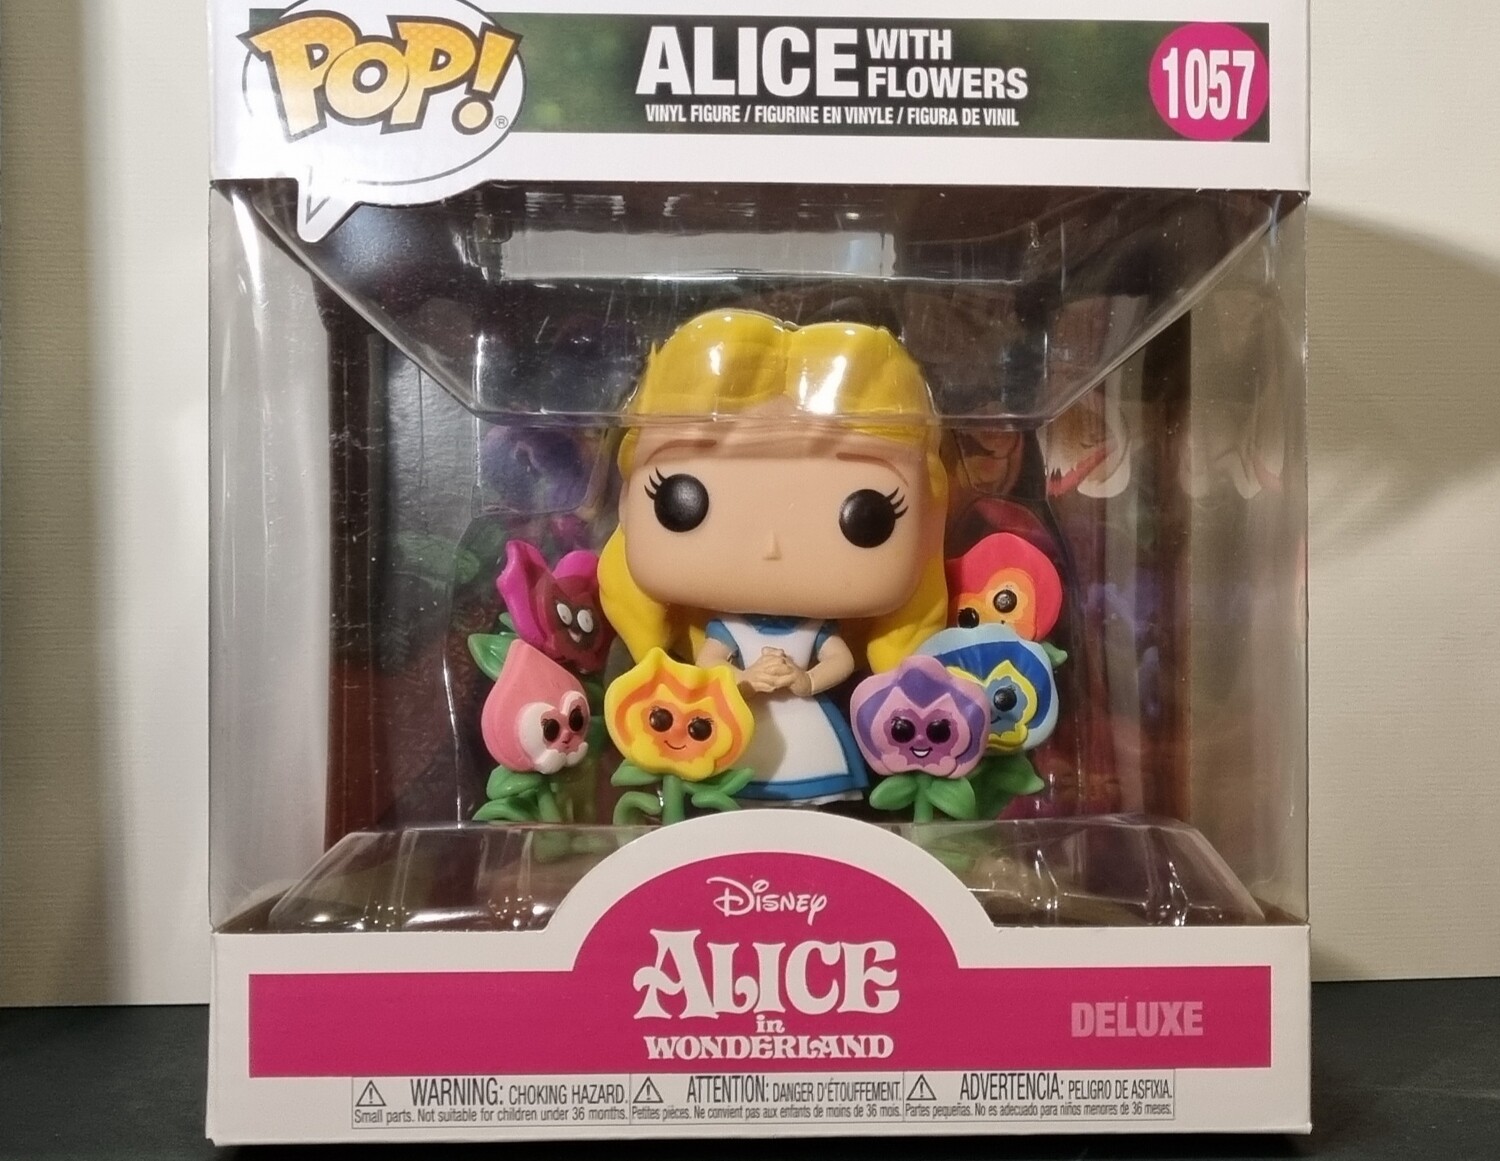 Funko Pop!, Alice with flowers, Deluxe, #1057, Disney, Alice in Wonderland